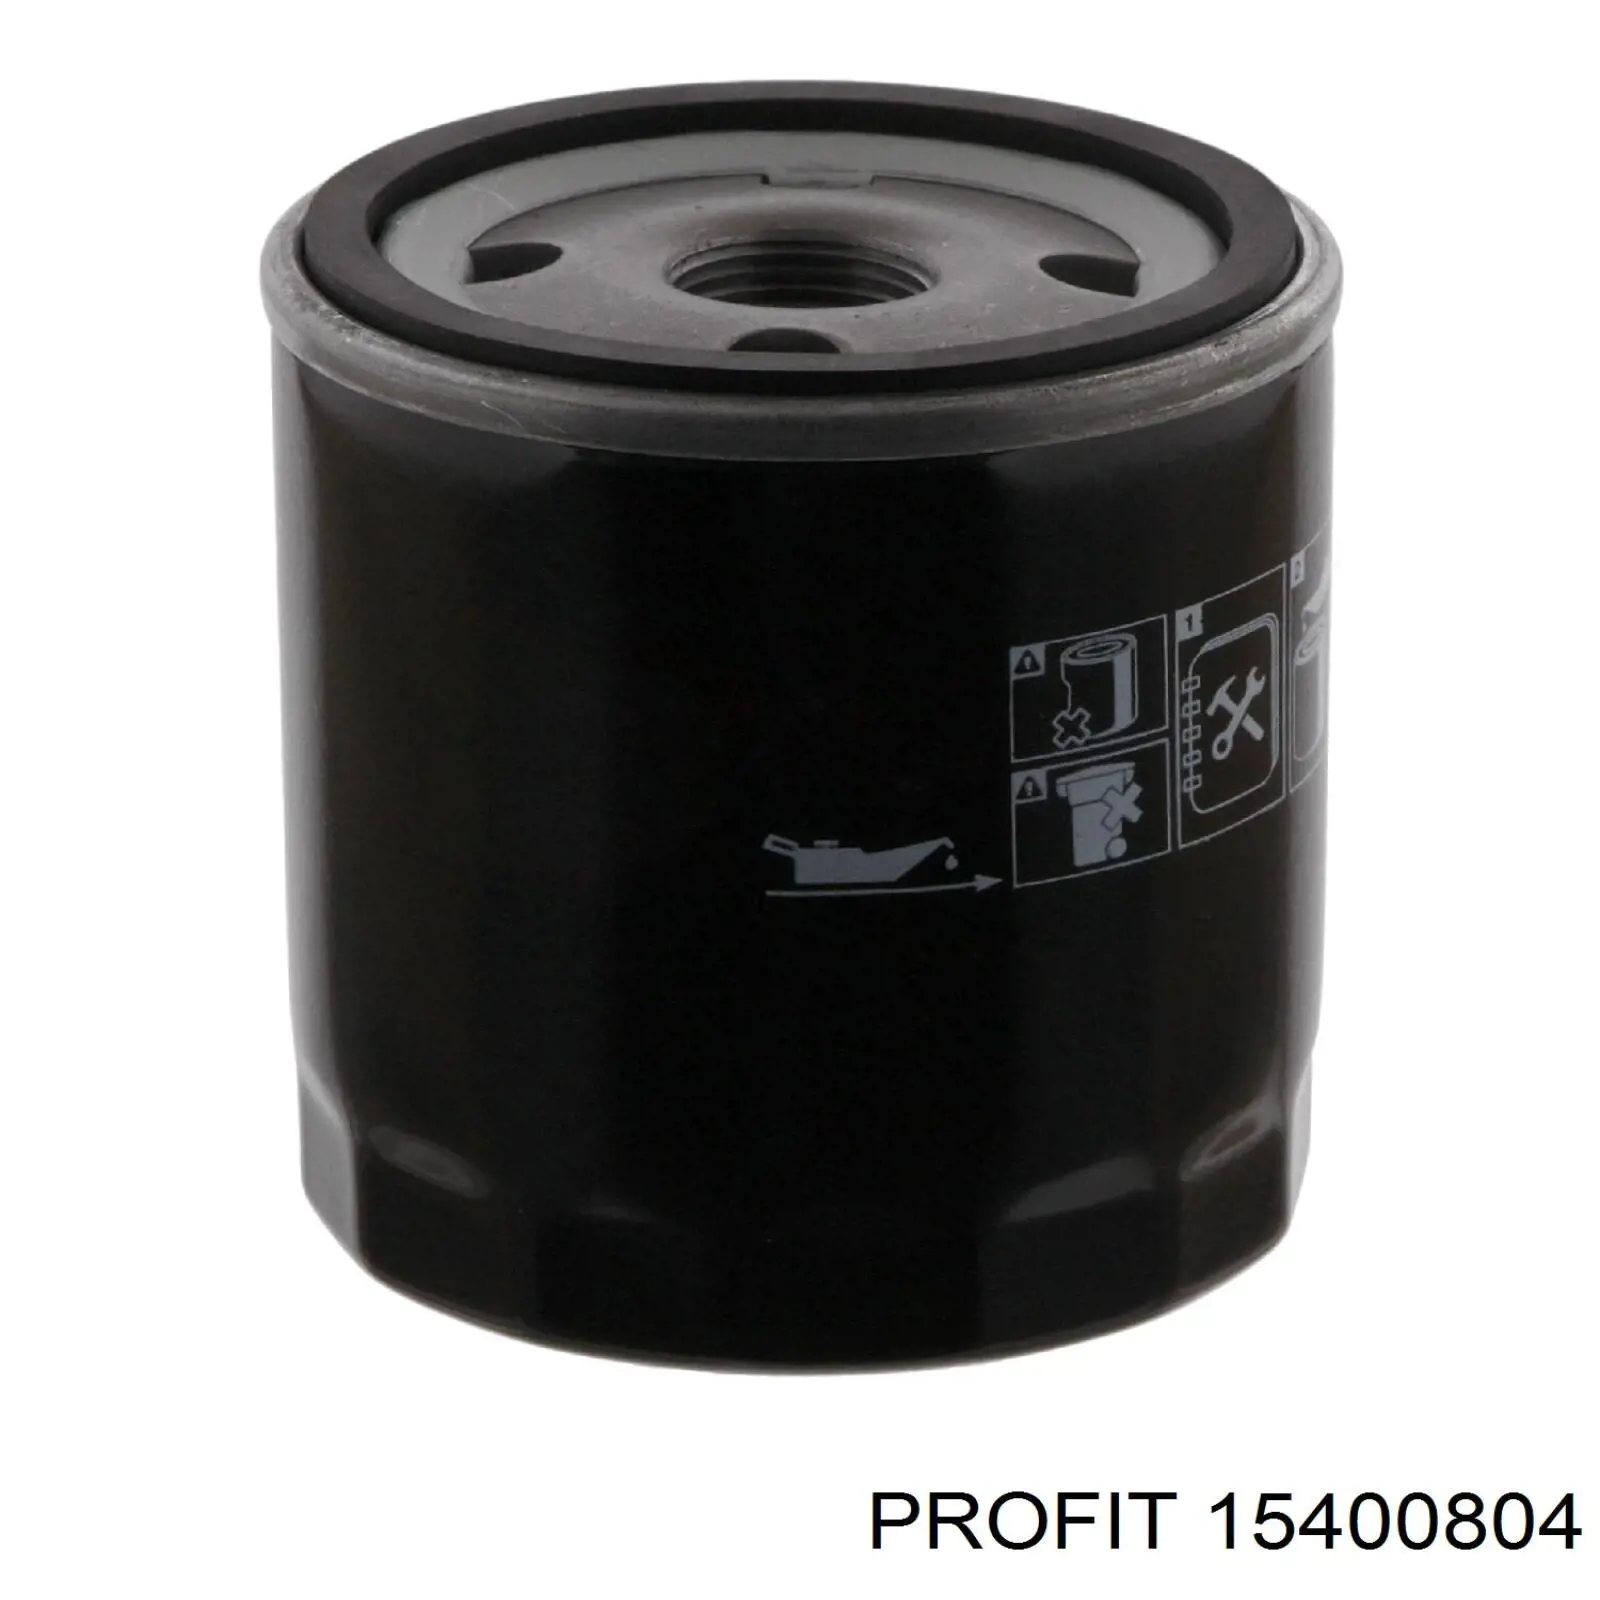 15400804 Profit filtro de aceite